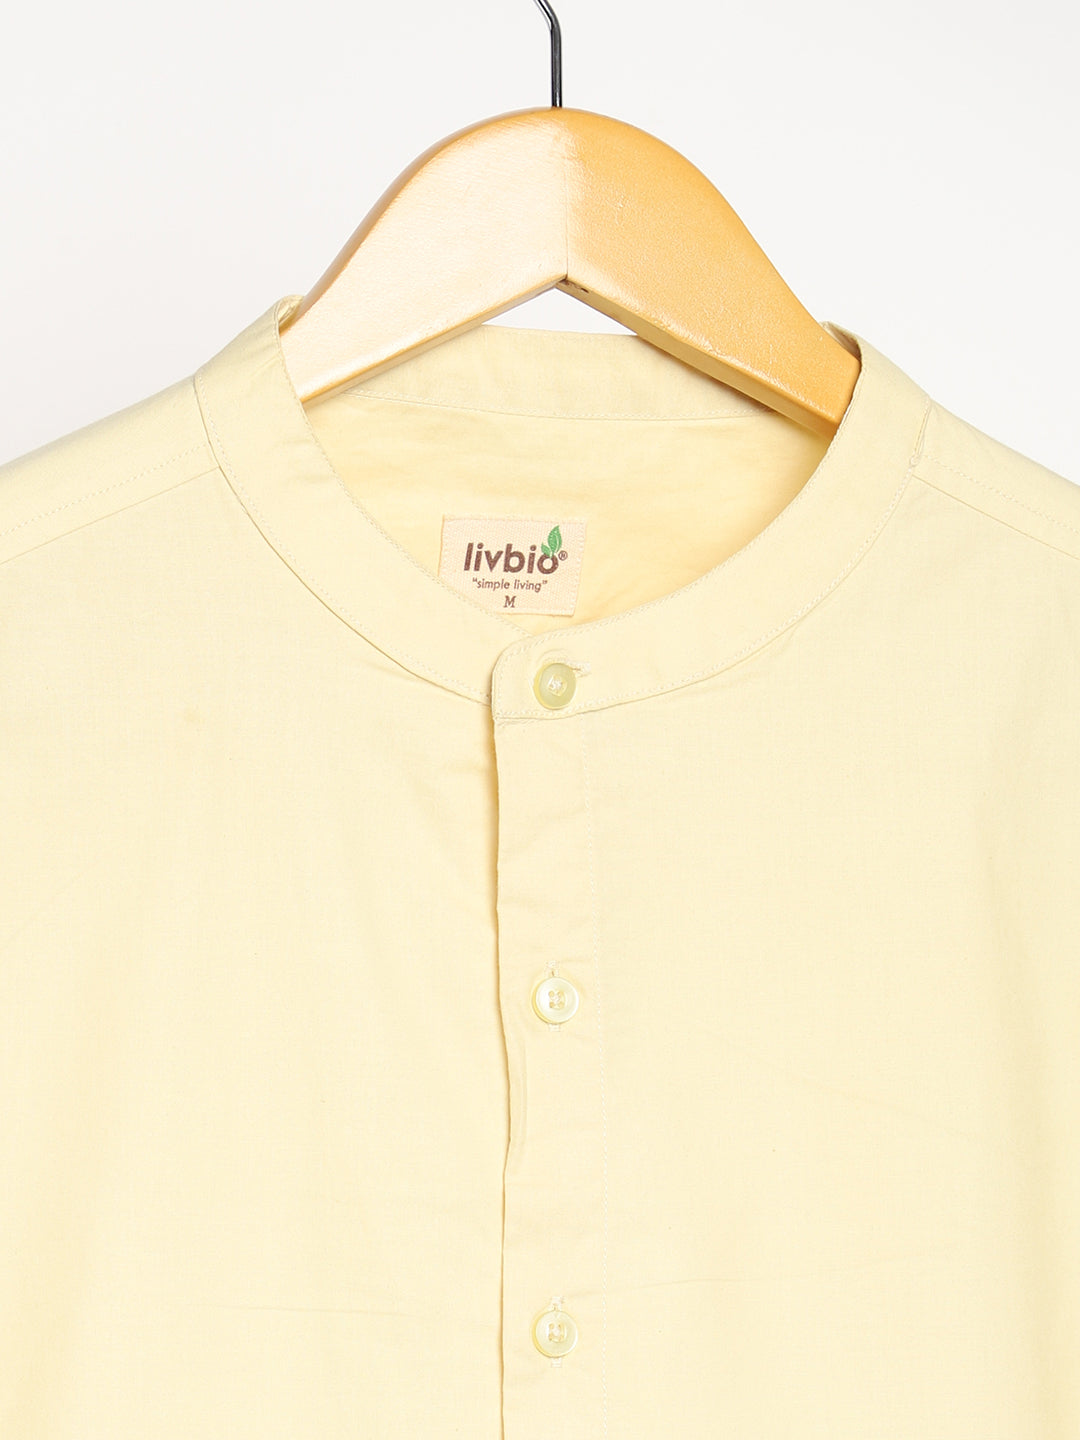 Lemon Yellow Mens Organic Cotton & Naturally Dyed Round Neck Shirt